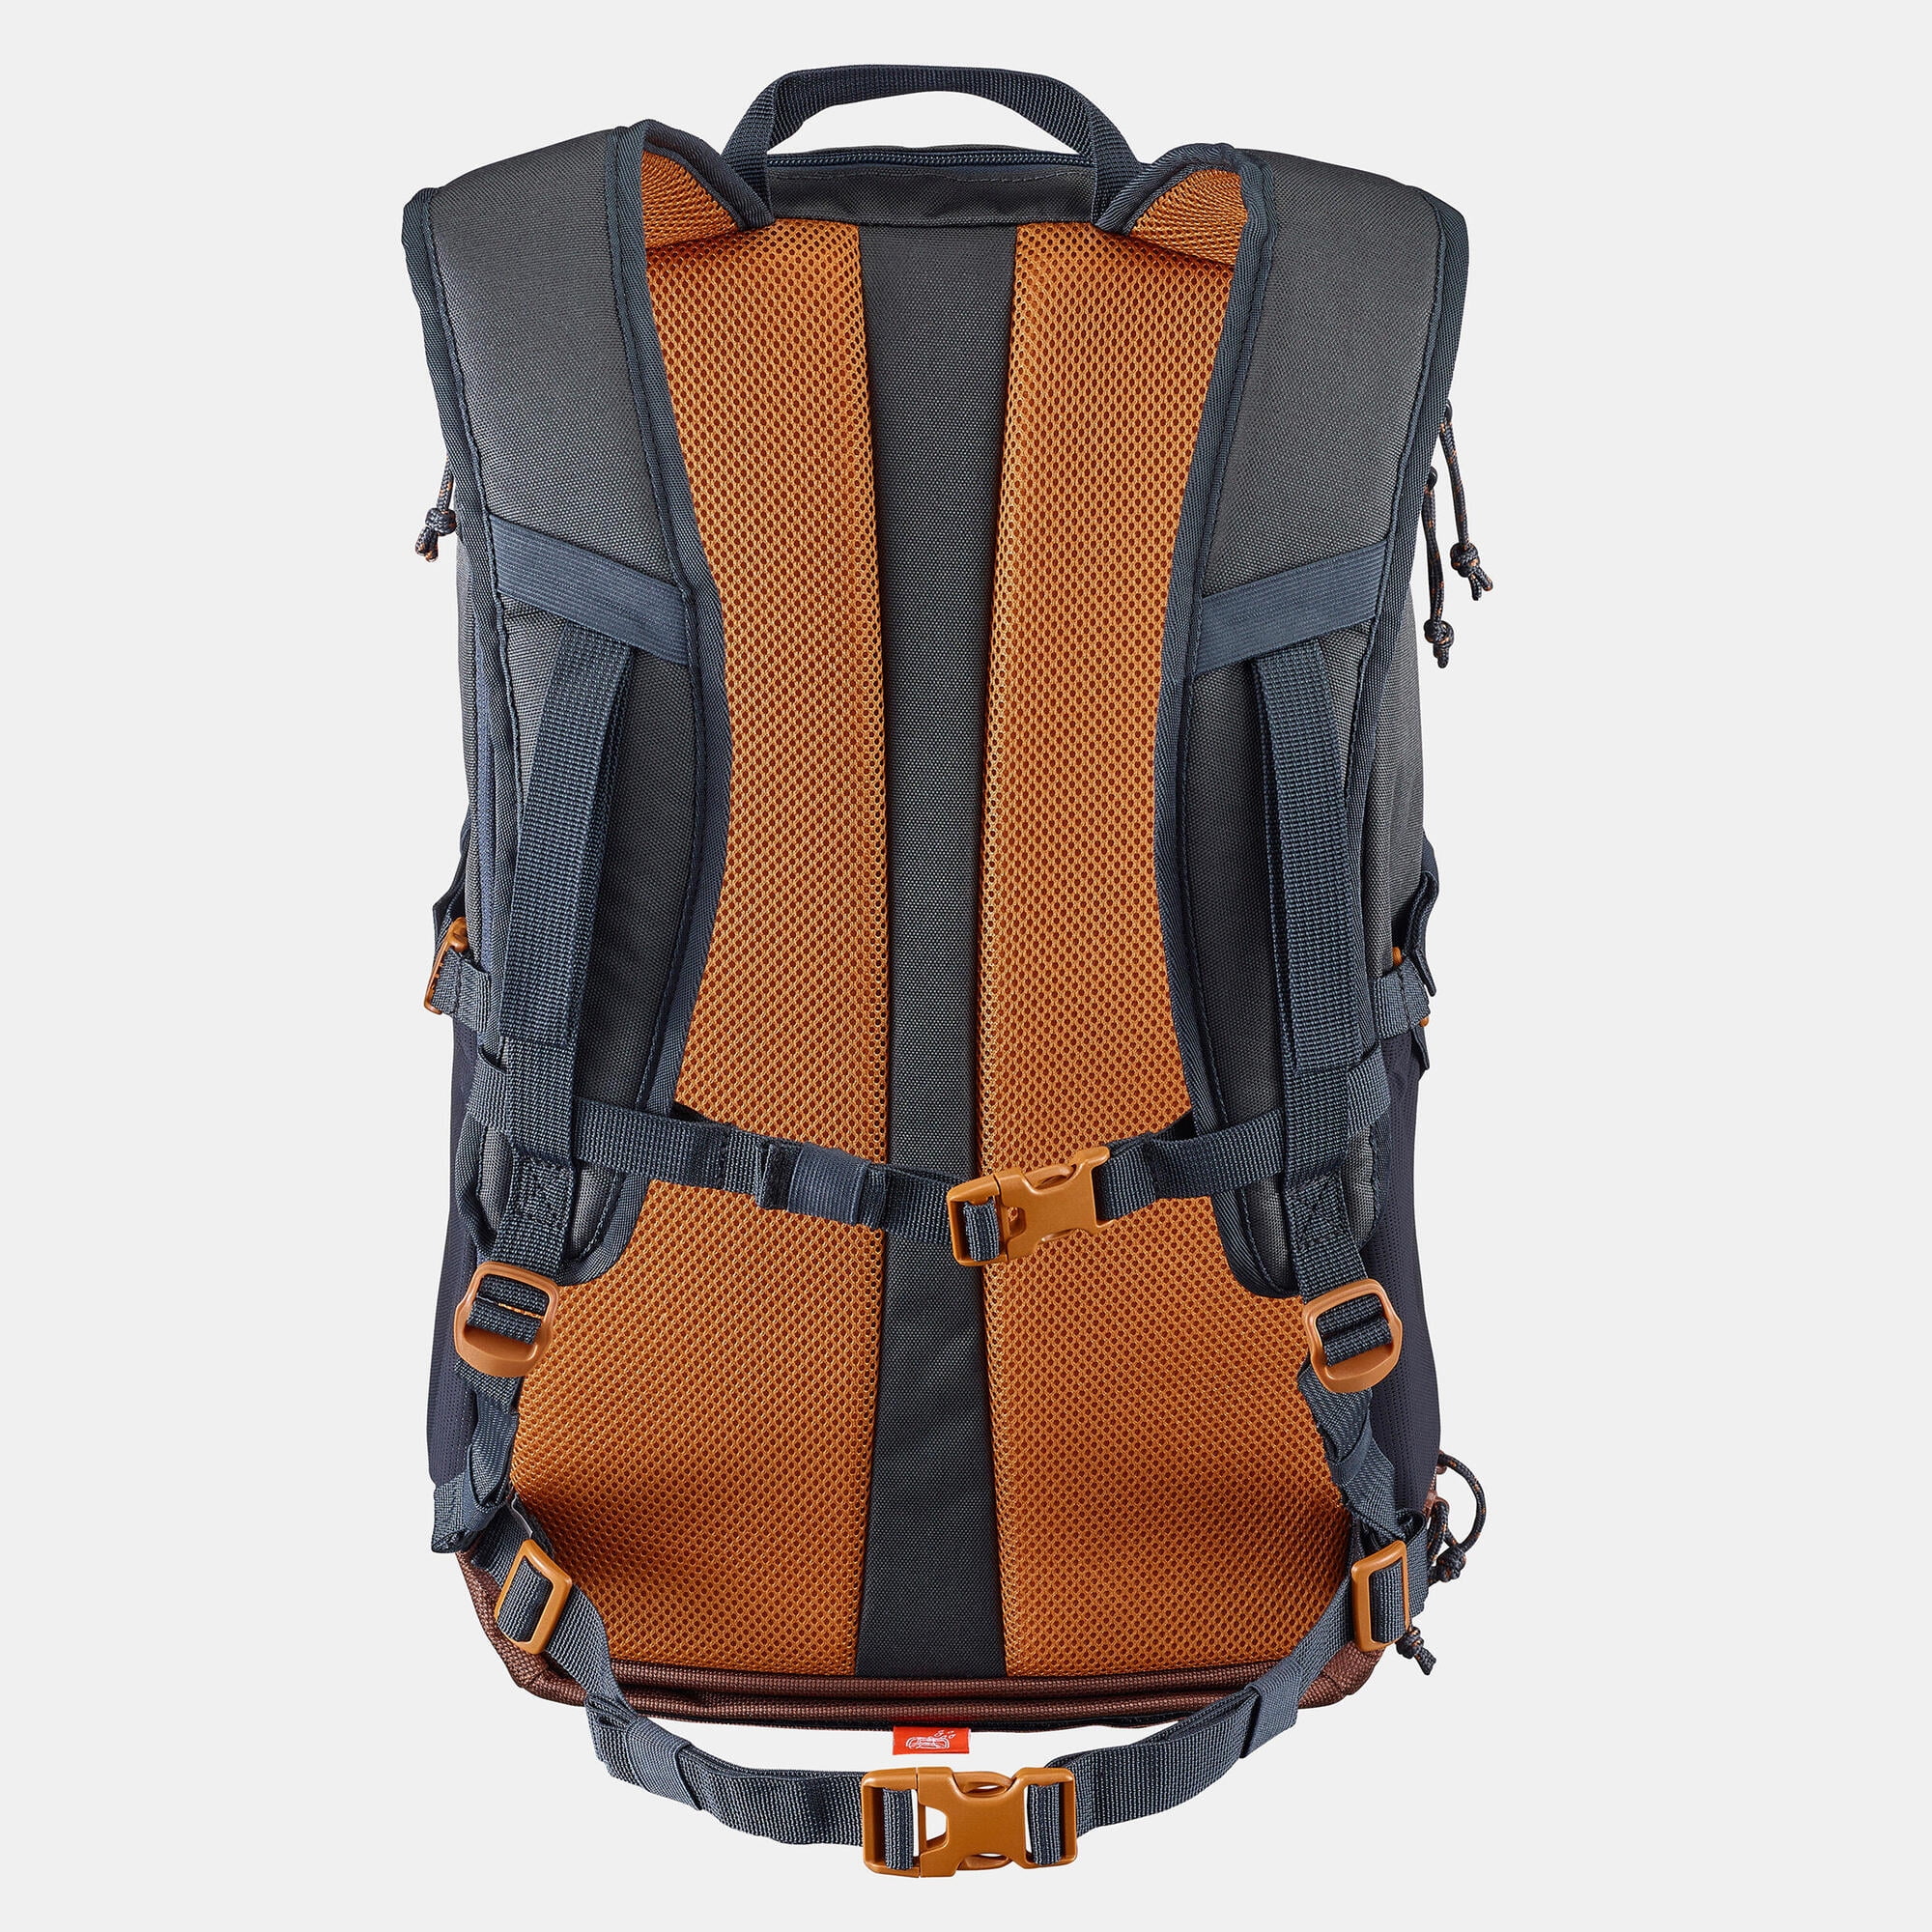 Quechua NH Arpenaz 100 30 L Hiking Backpack | Hiking backpack, Backpacks,  Daypack backpack